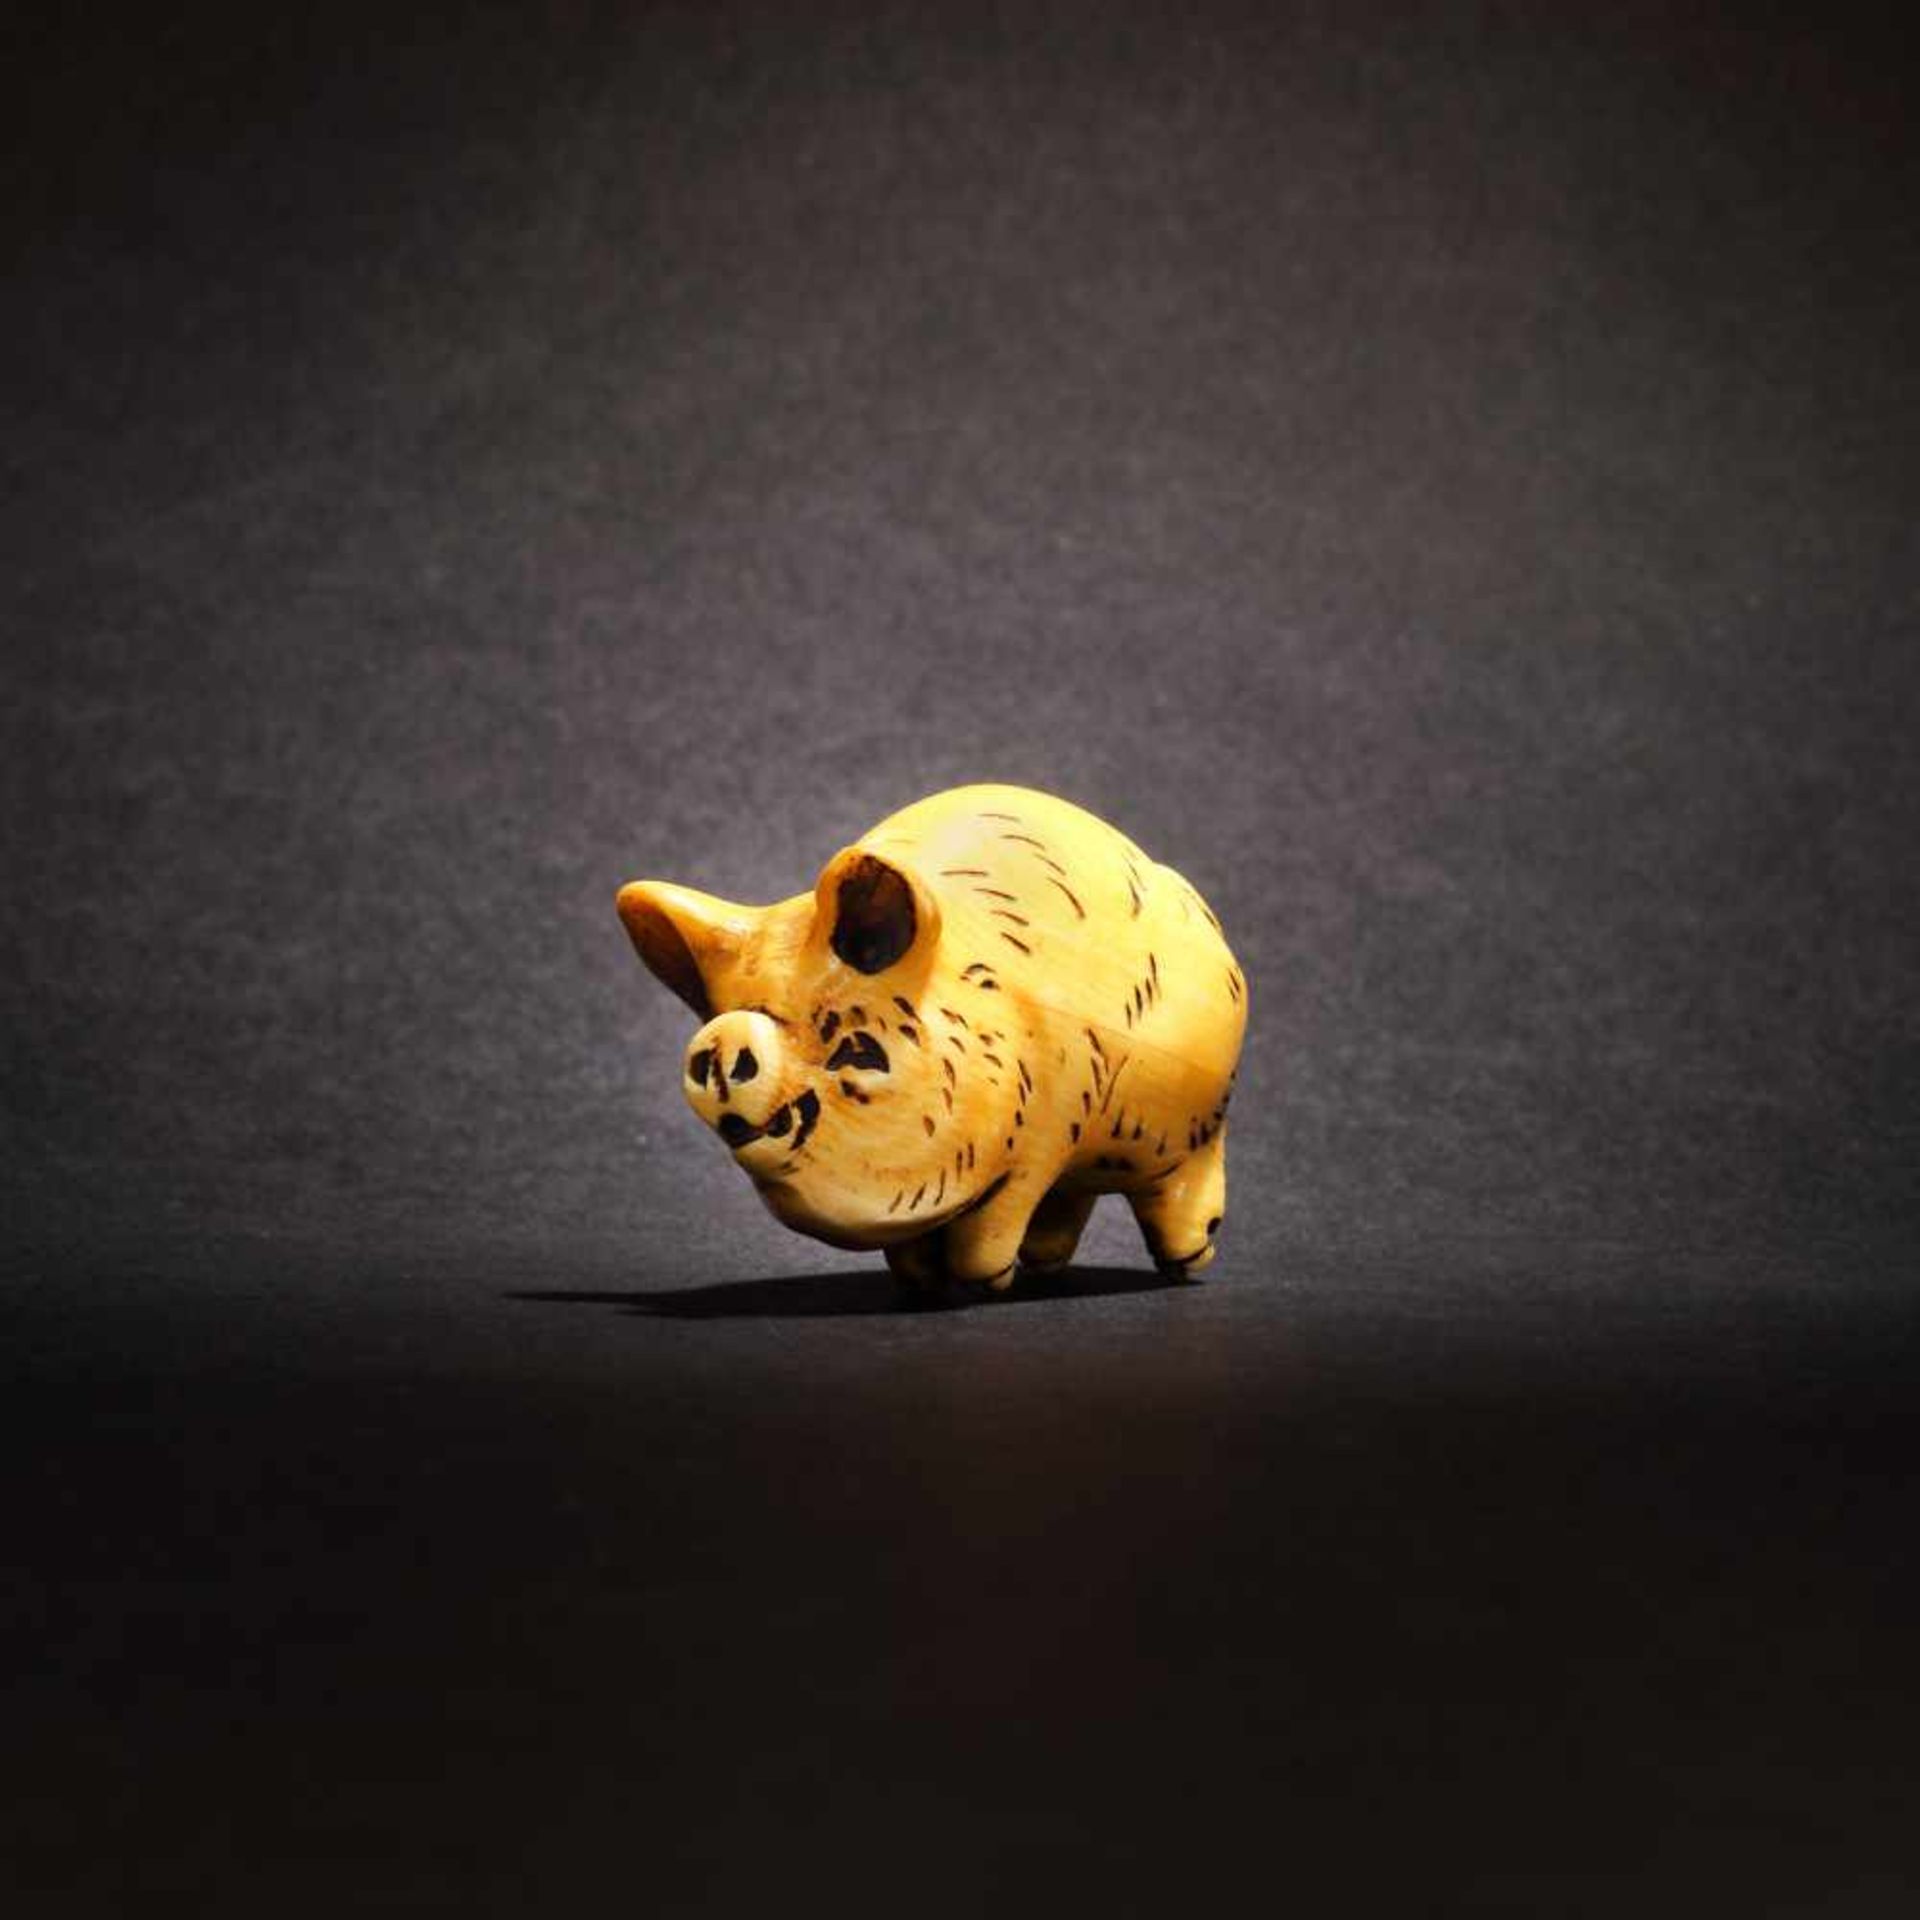 Ivory netsuke of a pig, Kazumasa signature, Meiji Era, Japan, the 19th centuryIvory netsuke of a